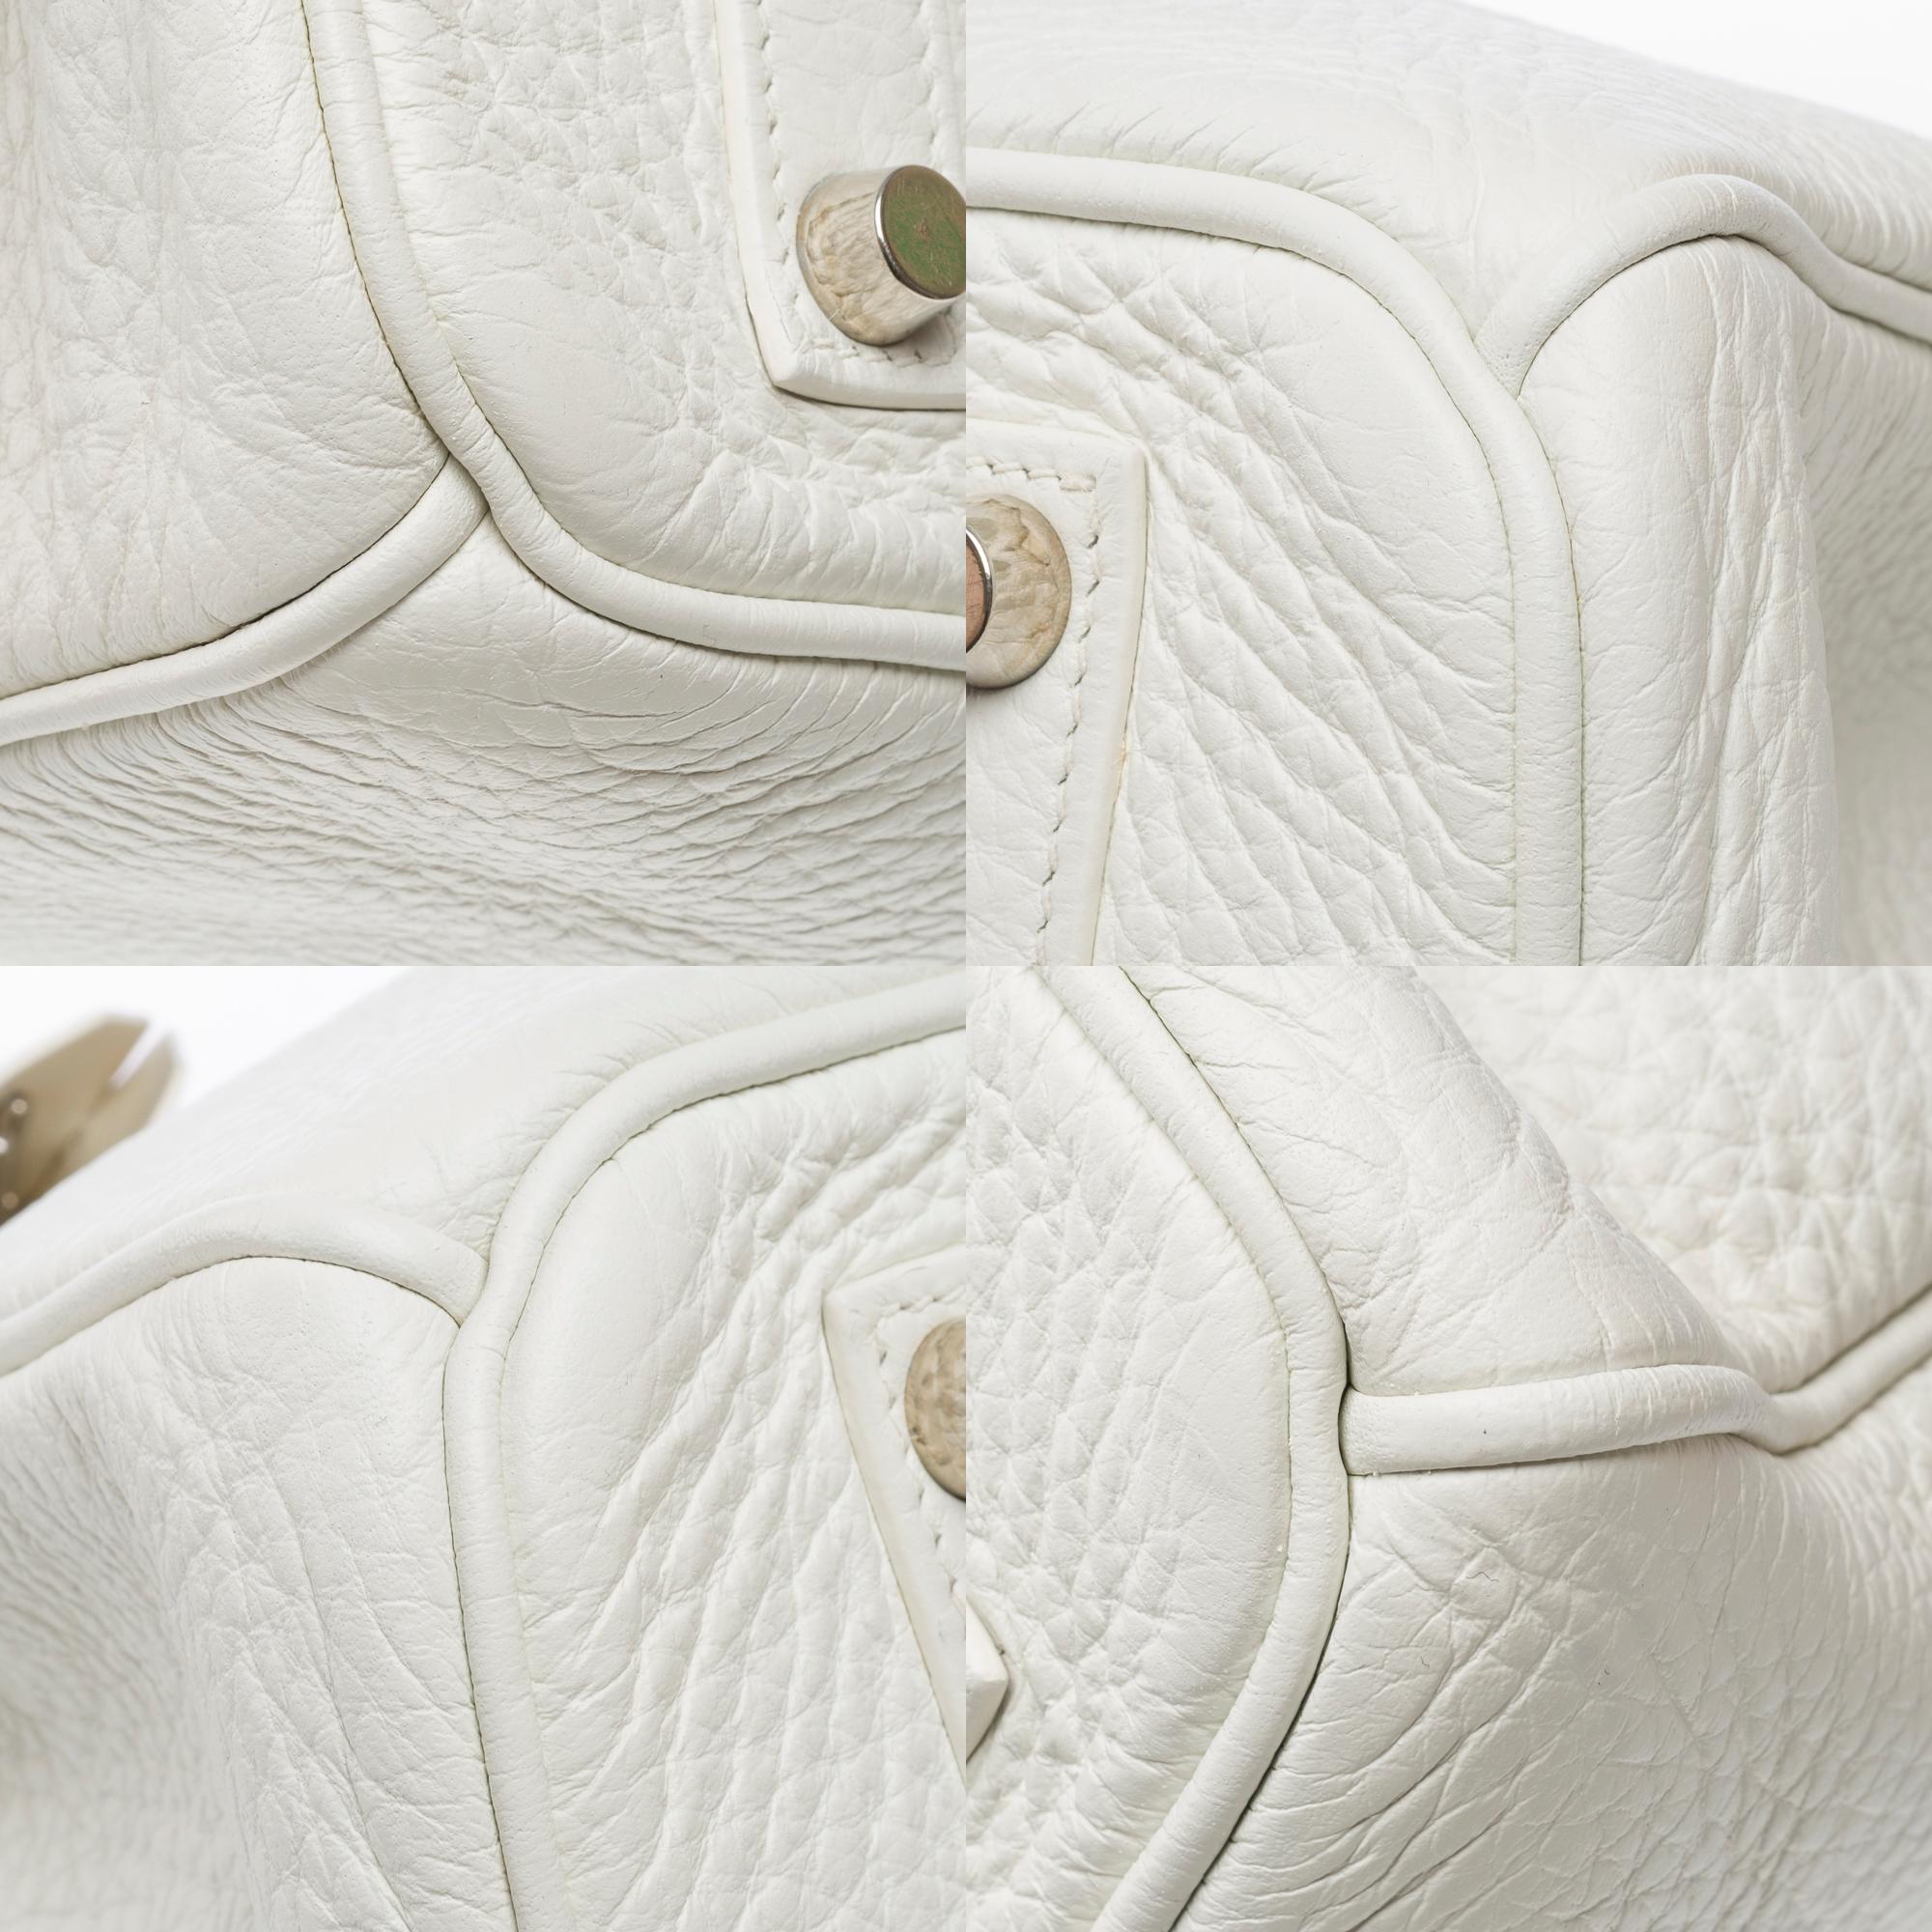 Stunning Hermès Birkin 35 handbag in White Taurillon Clemence leather, SHW 8